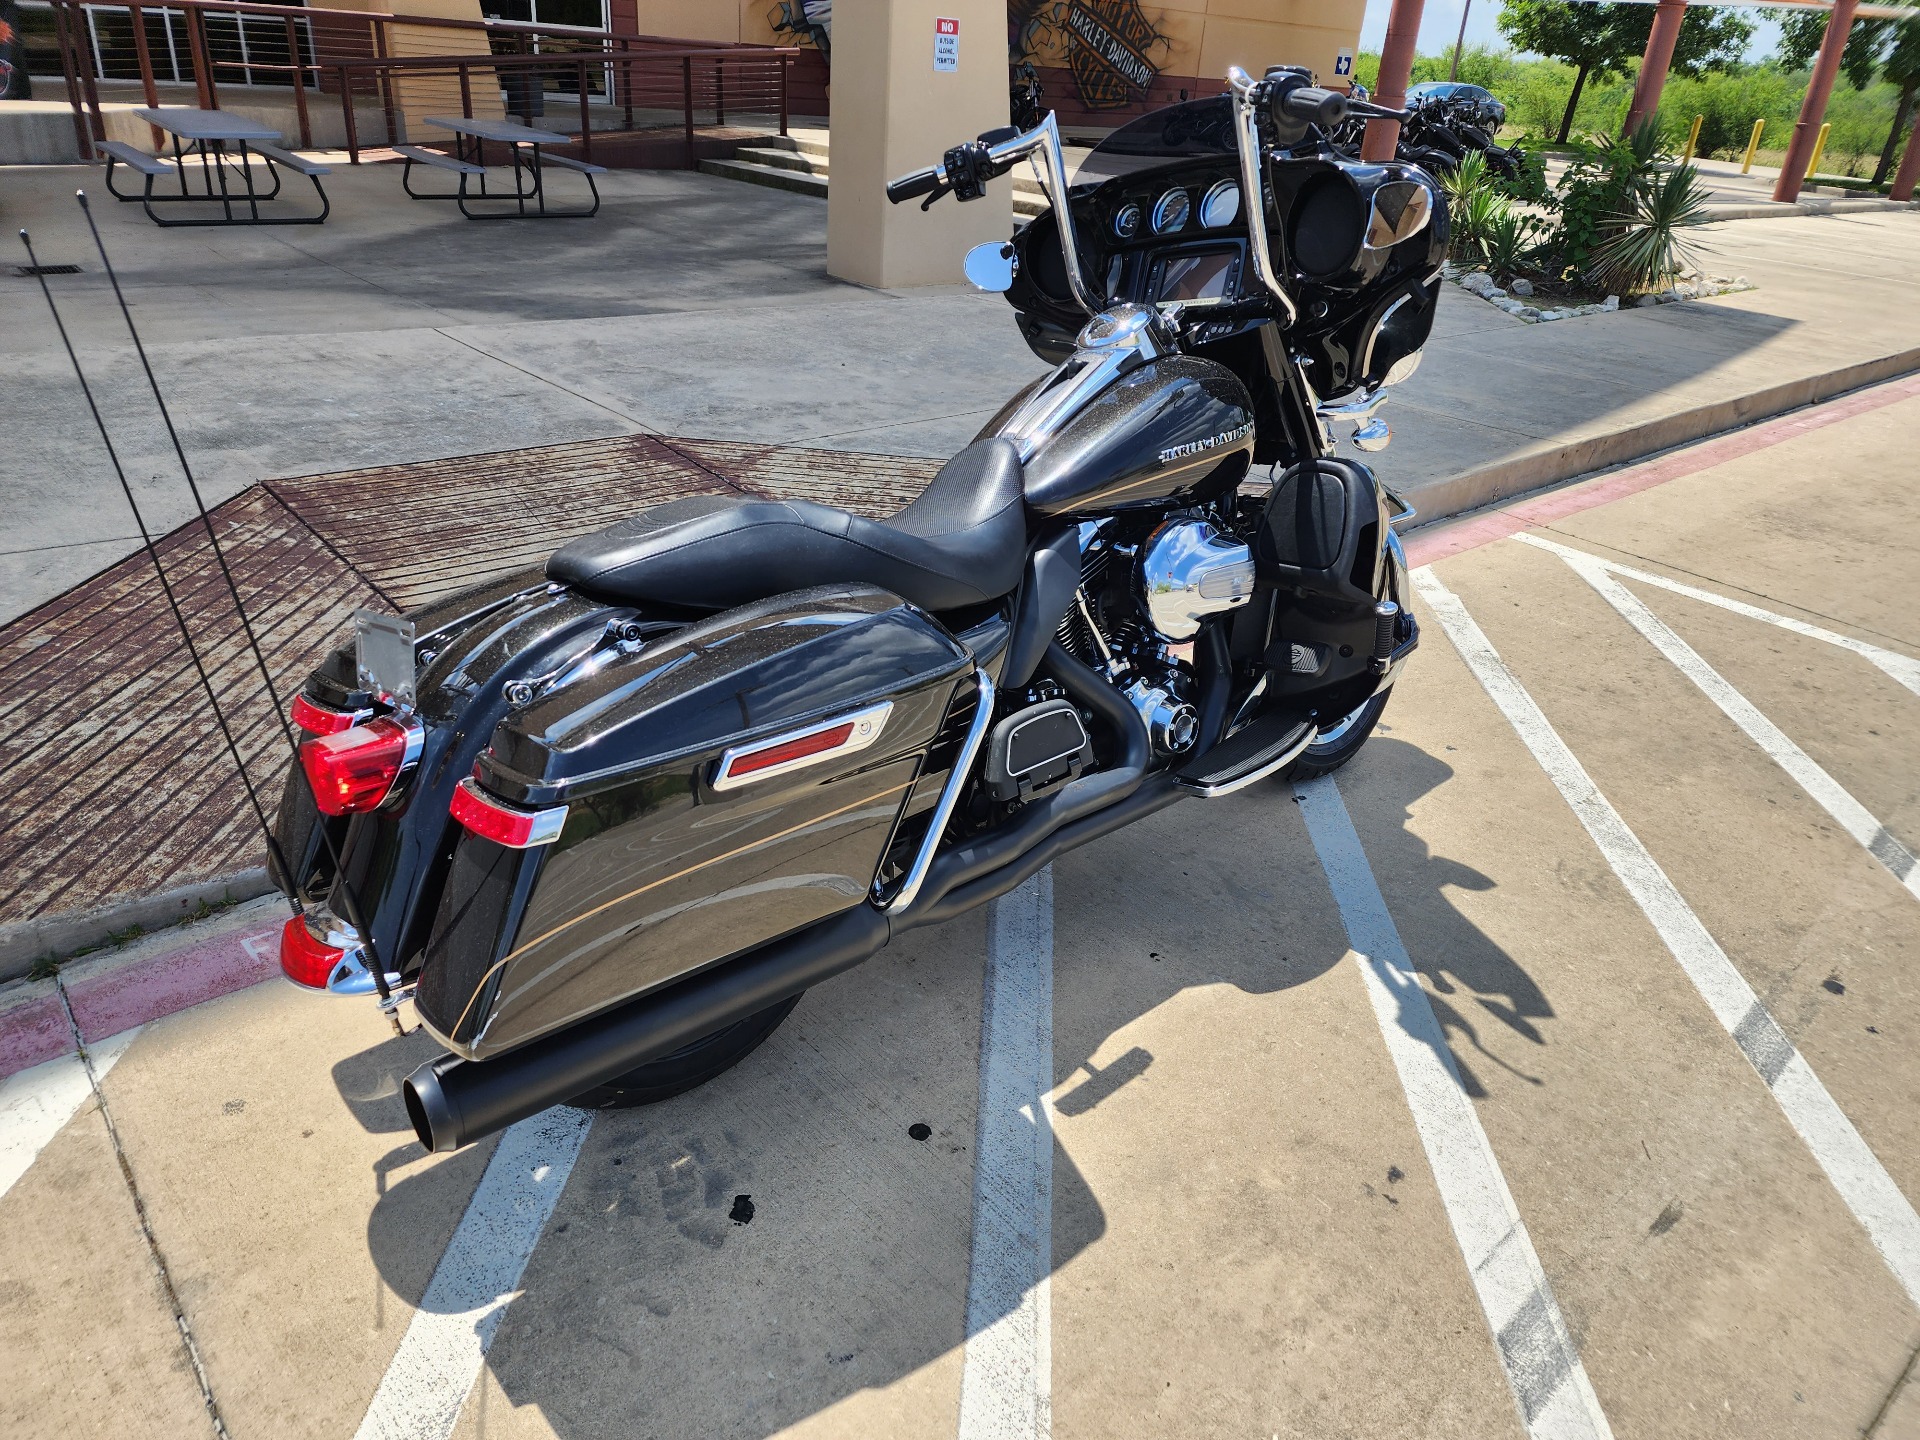 2016 Harley-Davidson Ultra Limited in San Antonio, Texas - Photo 8